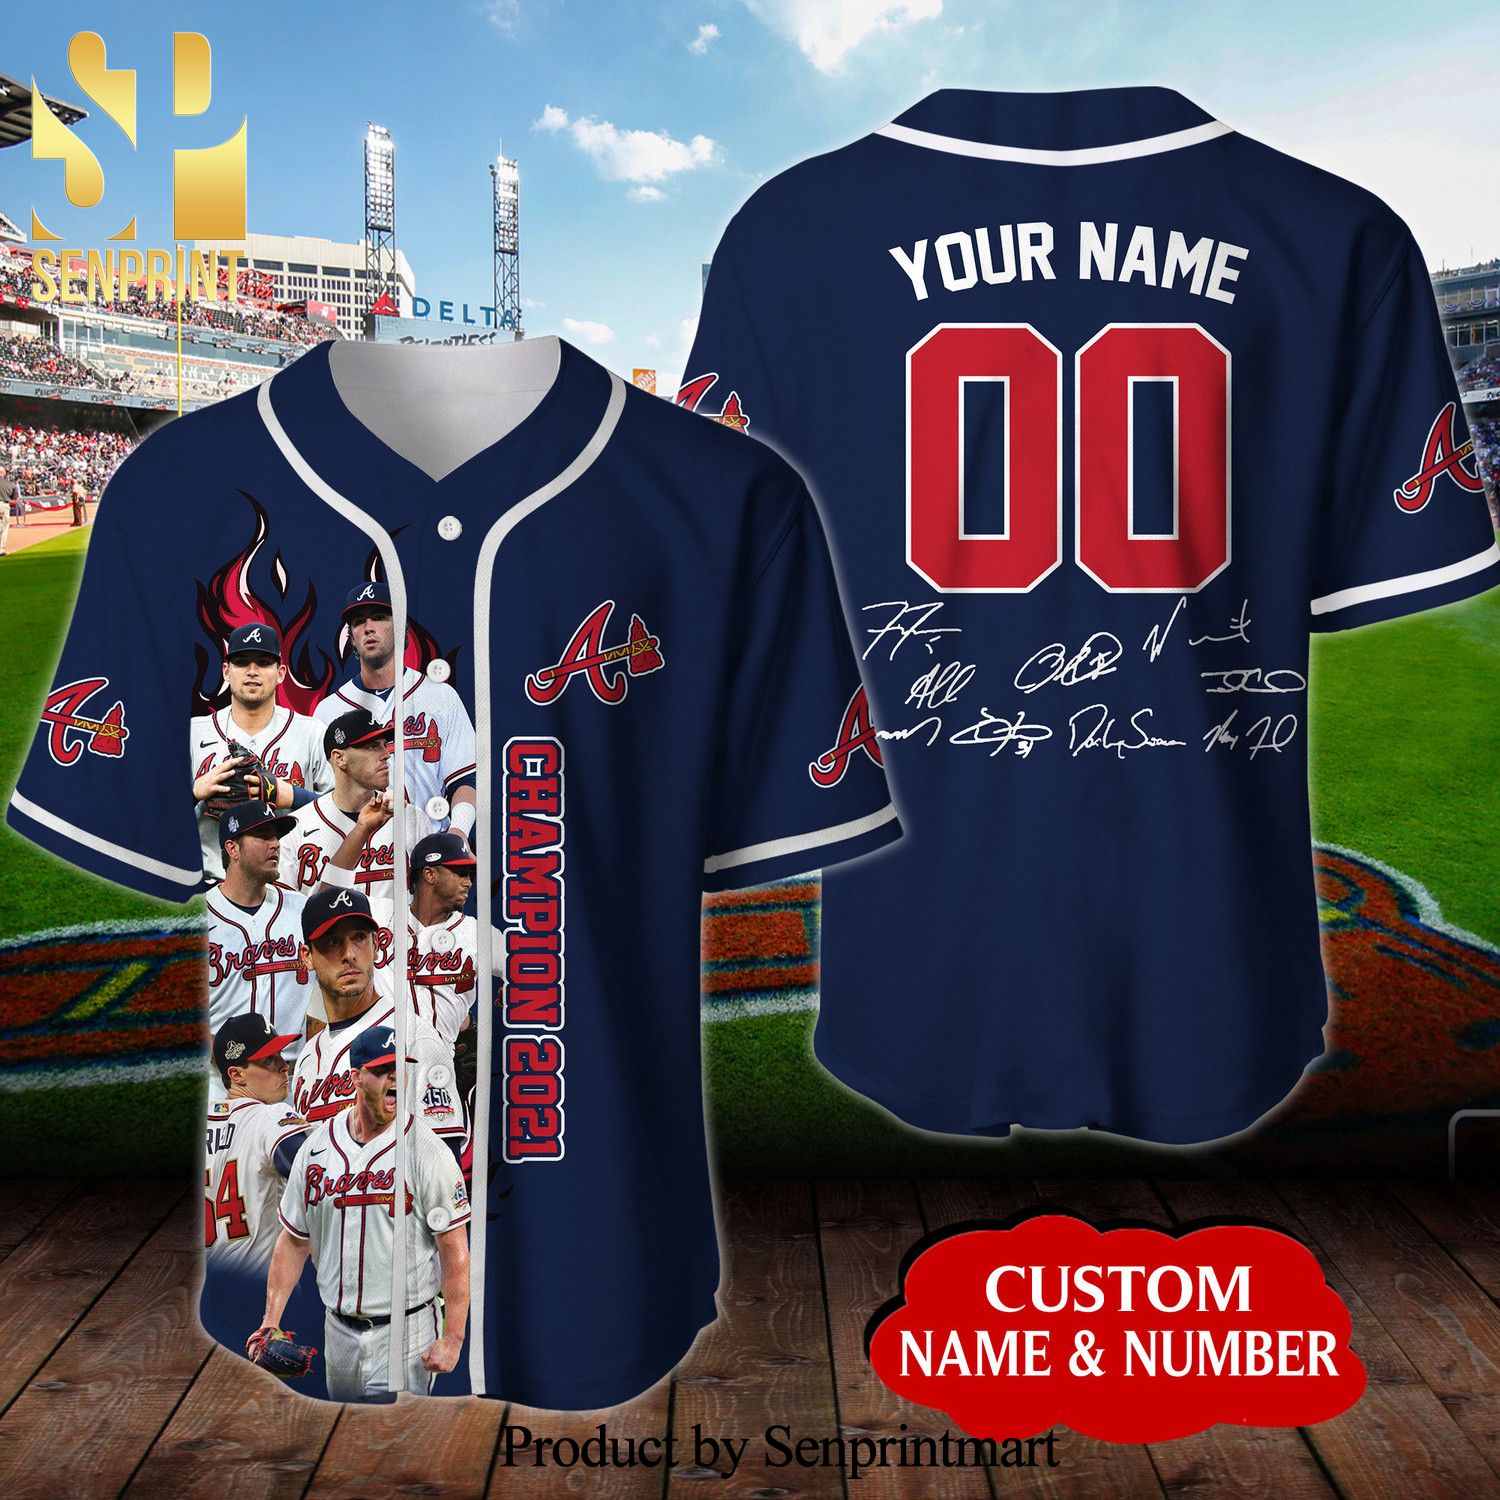 Personalized Atlanta Braves Signatures Full Printing Baseball Jersey – Navy